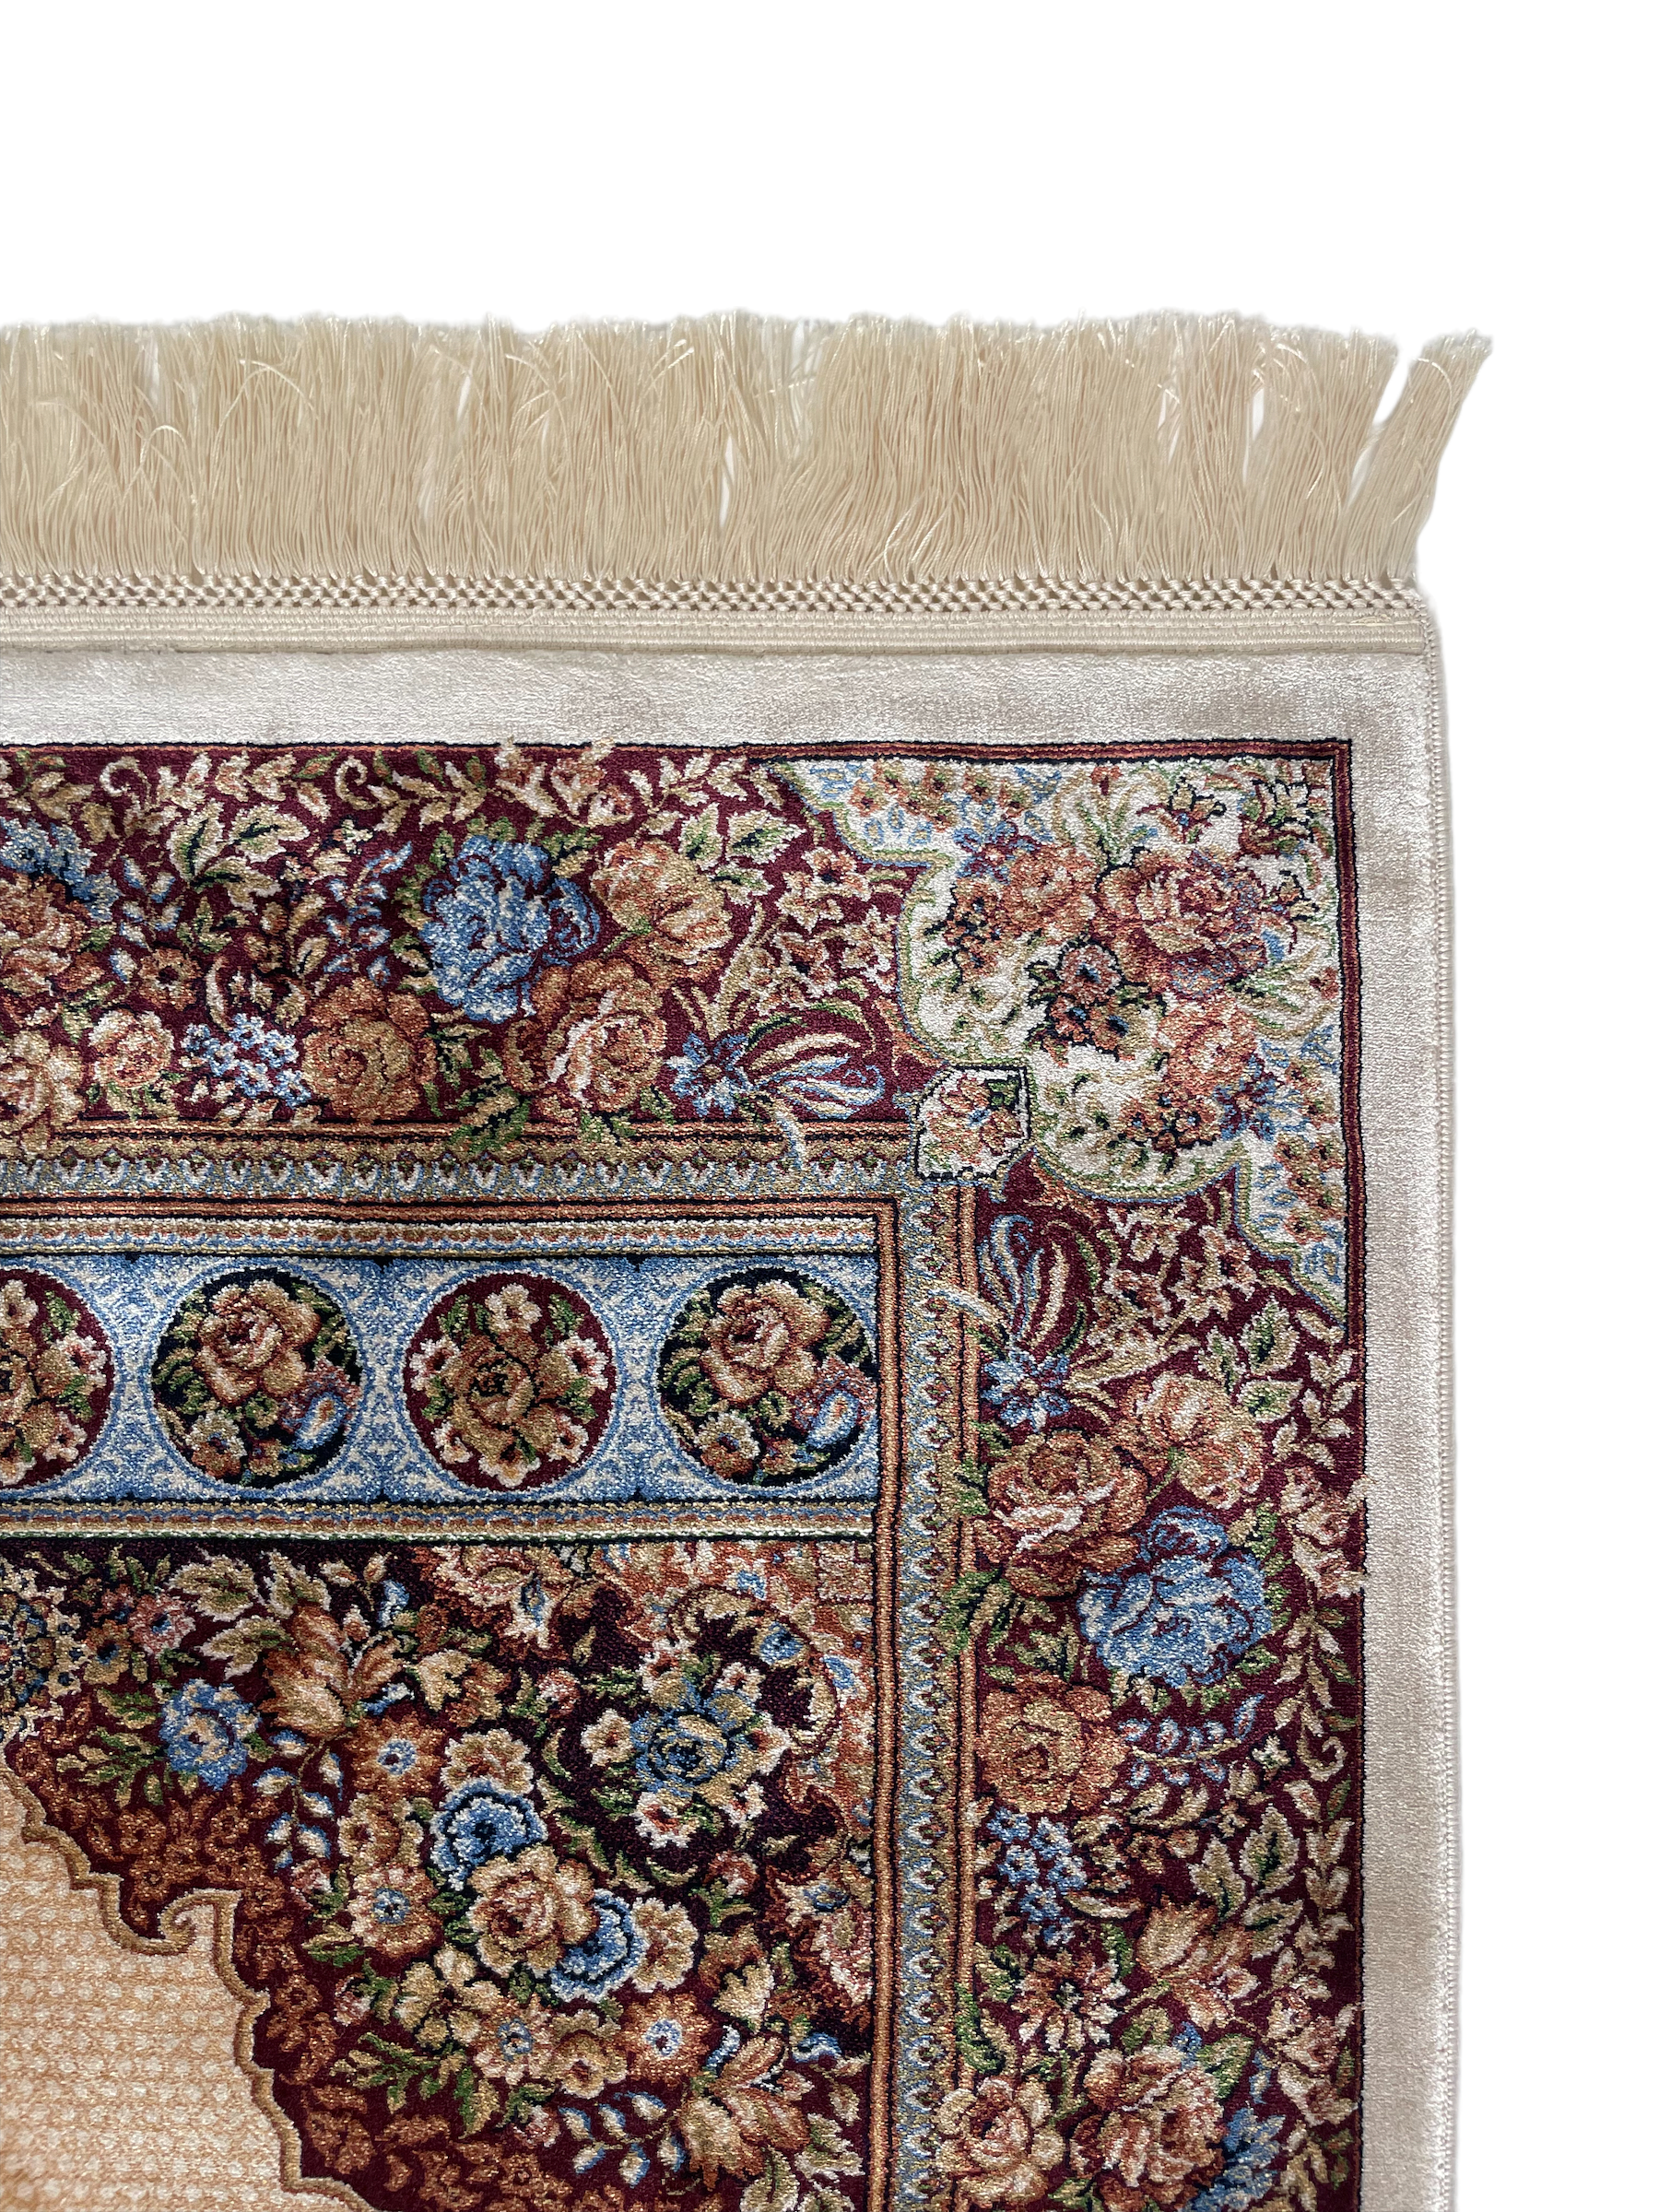 The Hudur rug displays the traditional Islamic "mihrab" design.